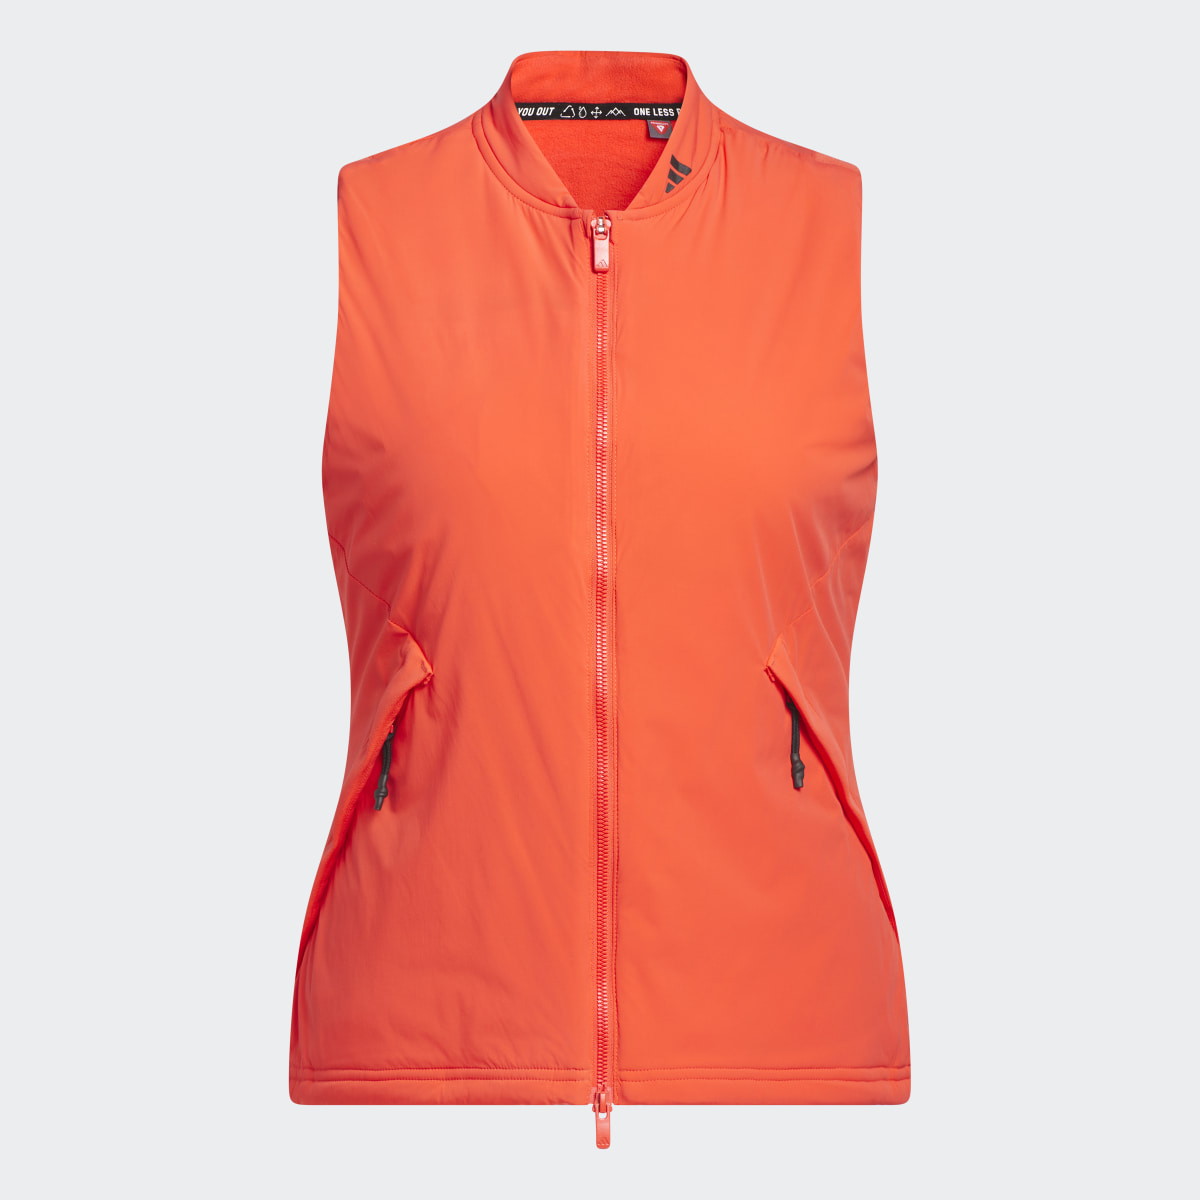 Adidas Ultimate365 Tour Frostguard Vest. 7